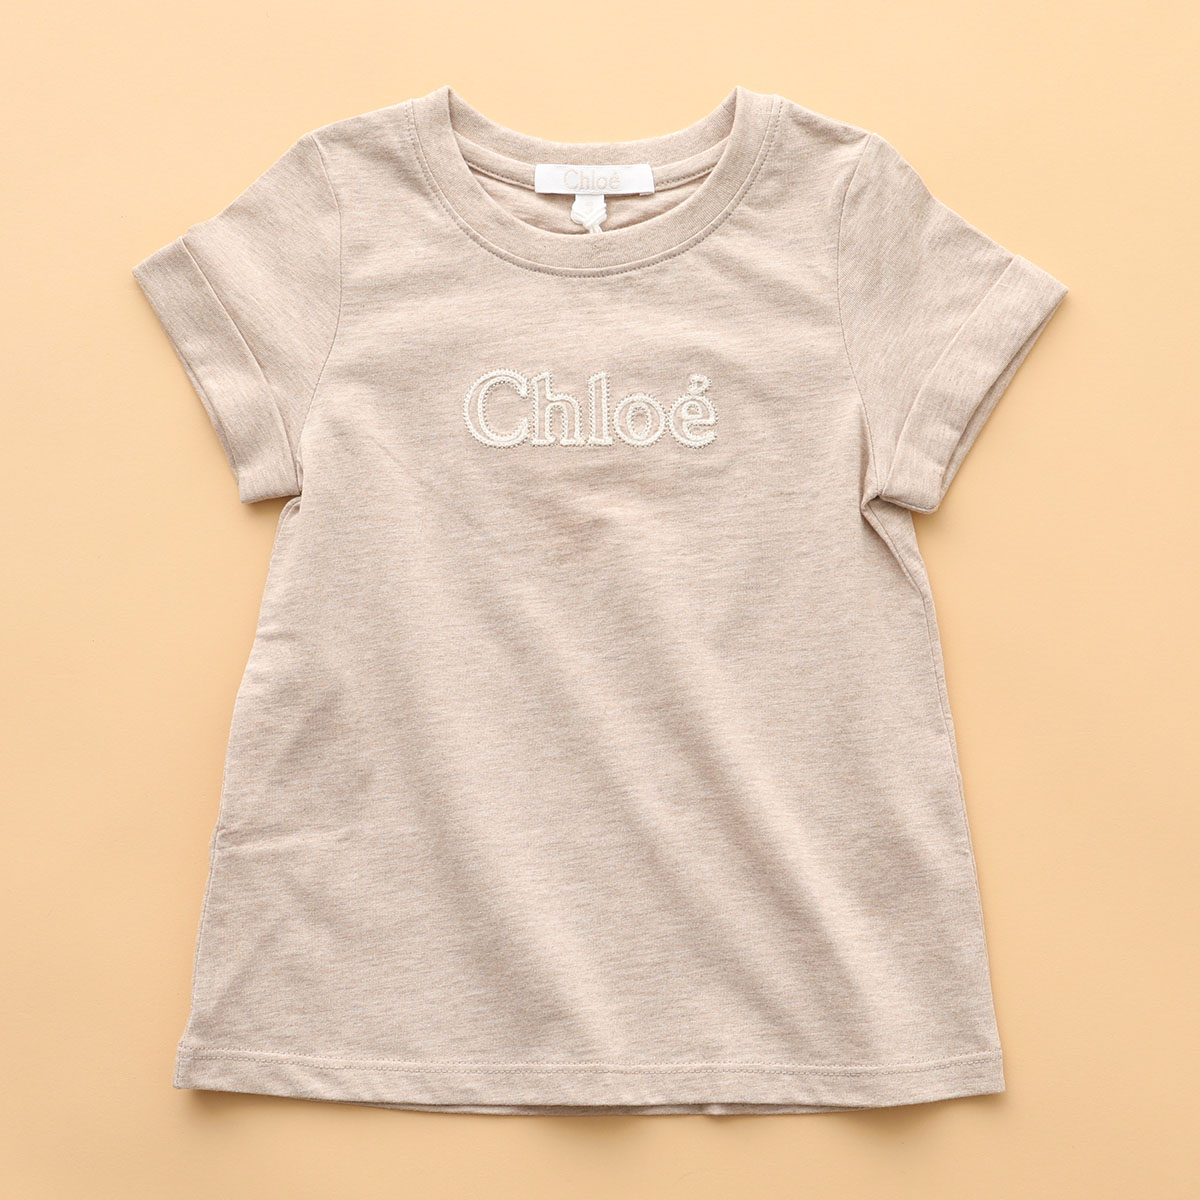 Chloe Kids クロエ キッズ 半袖 Tシャツ C20112 ガールズ カットソー ロゴ刺繍 ...